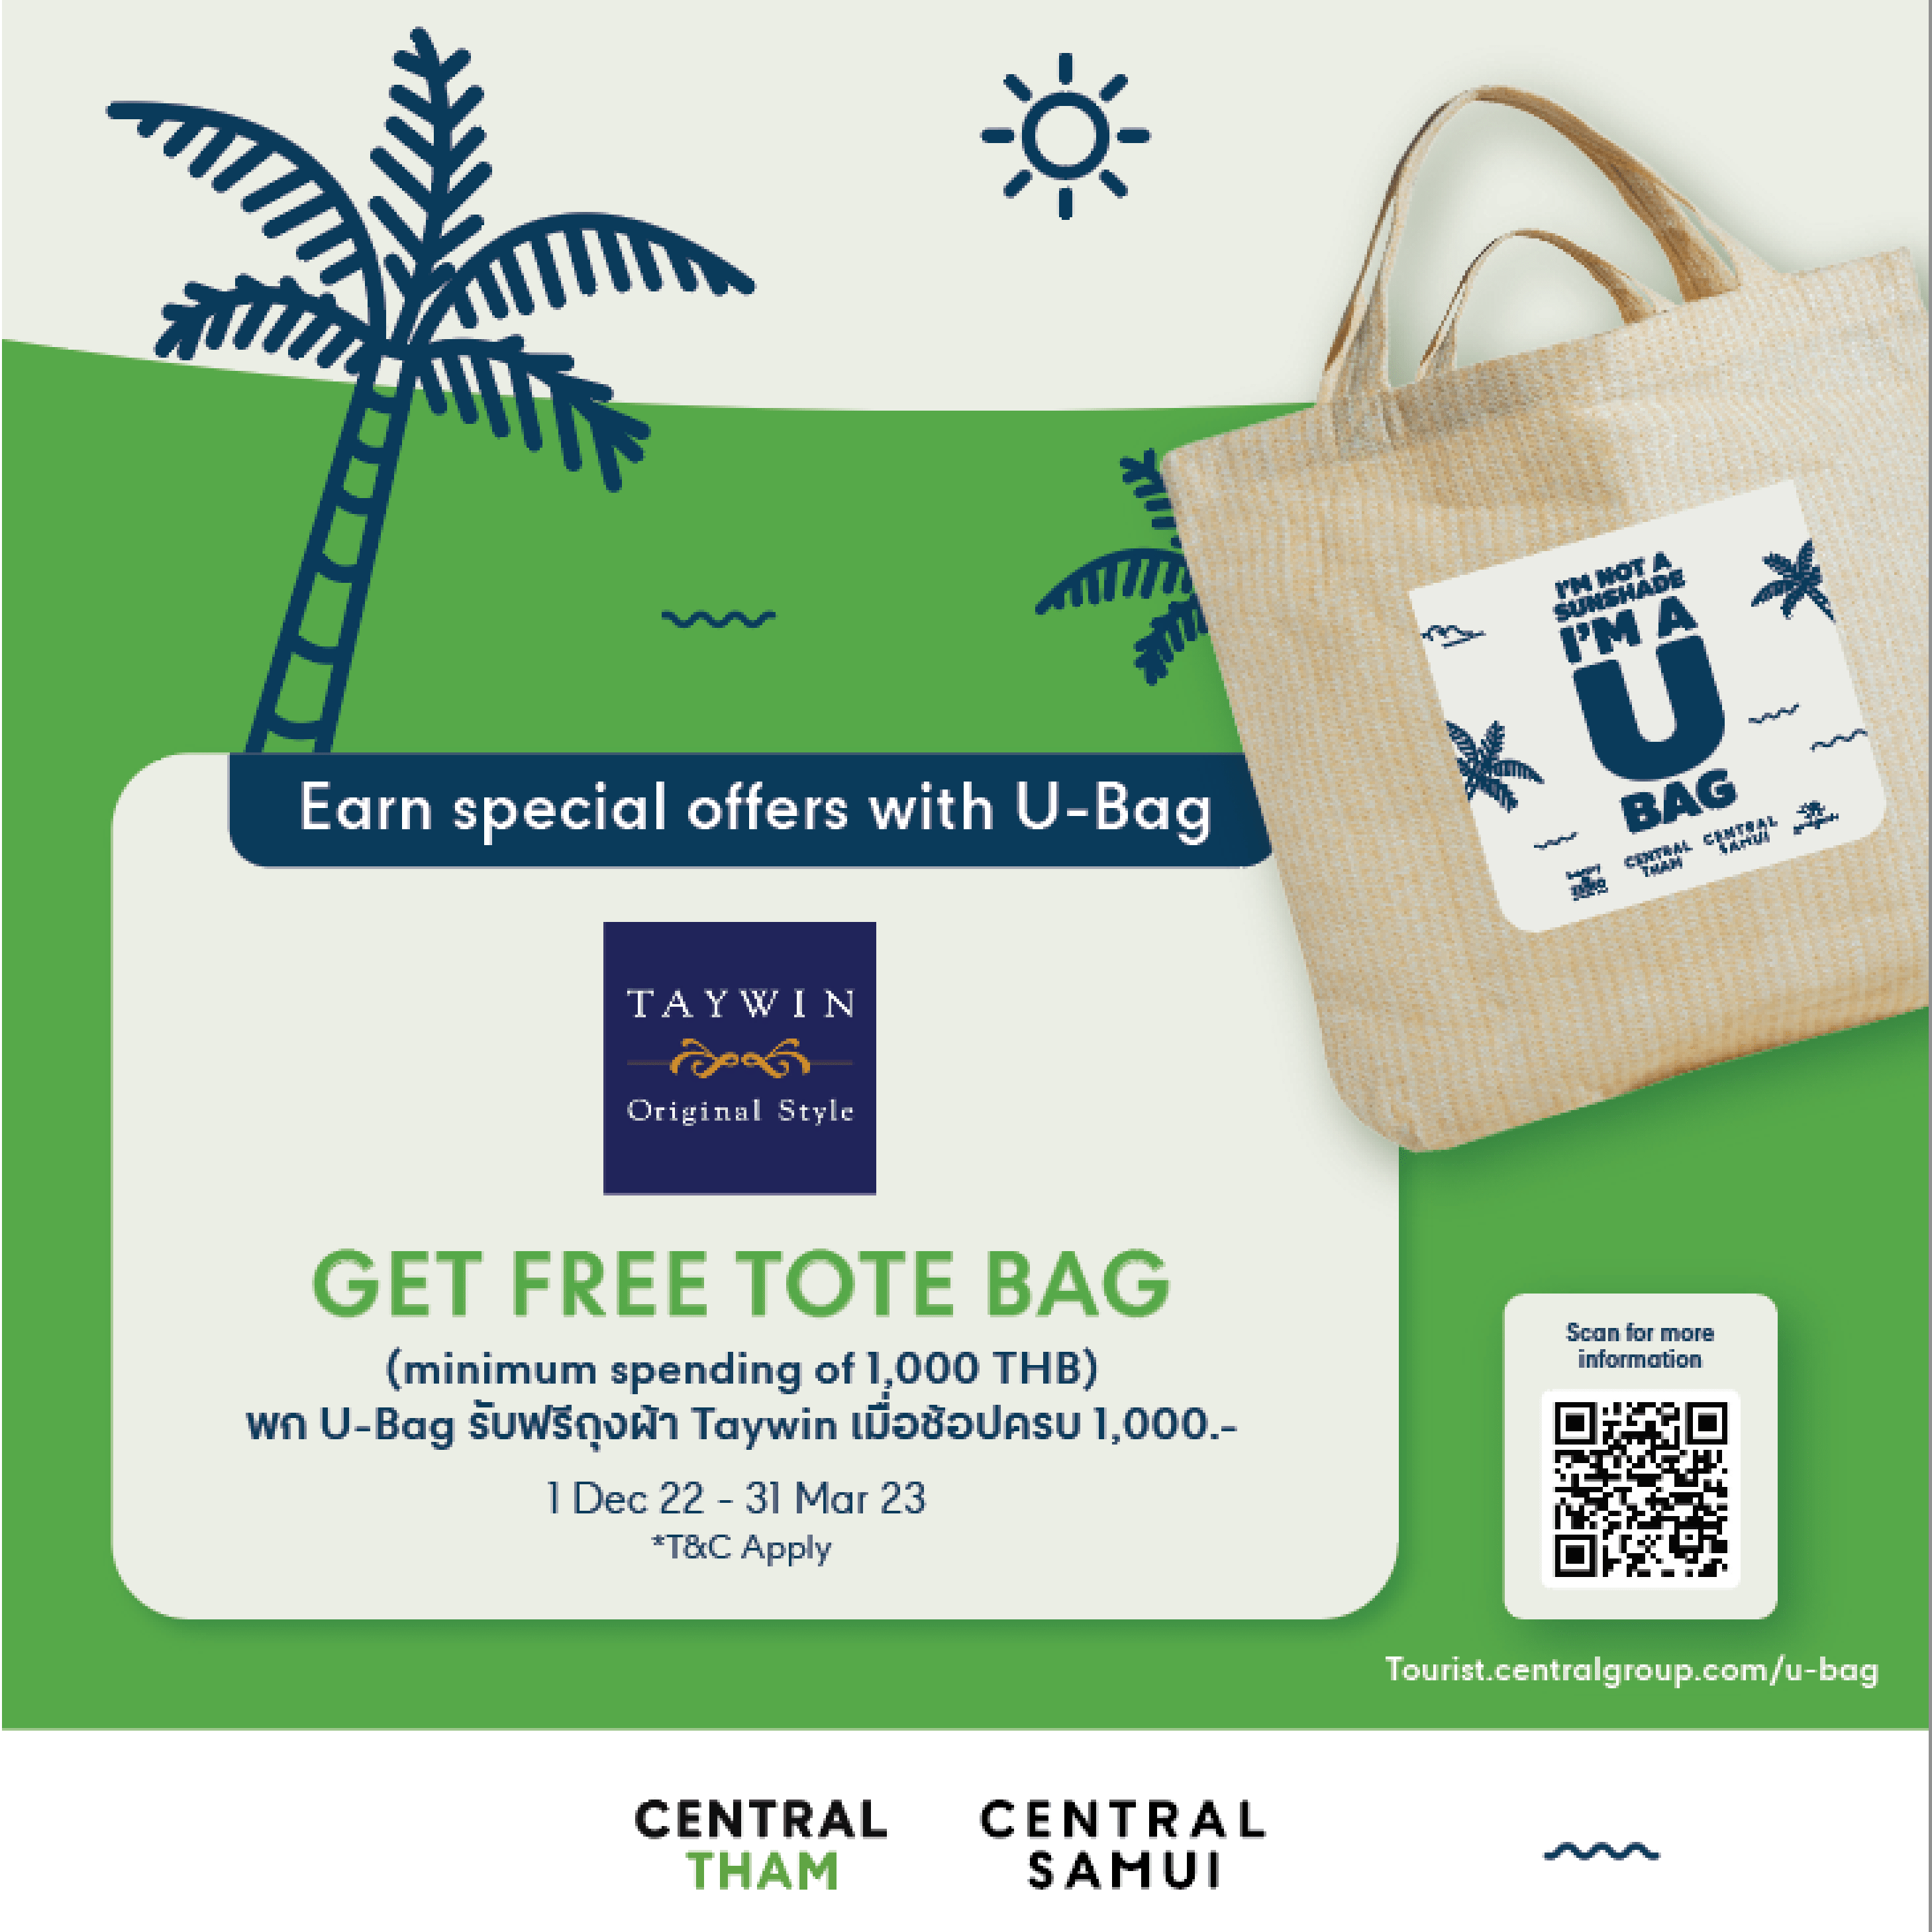 Get free tote bag (minimum spending of 1,000 thb)